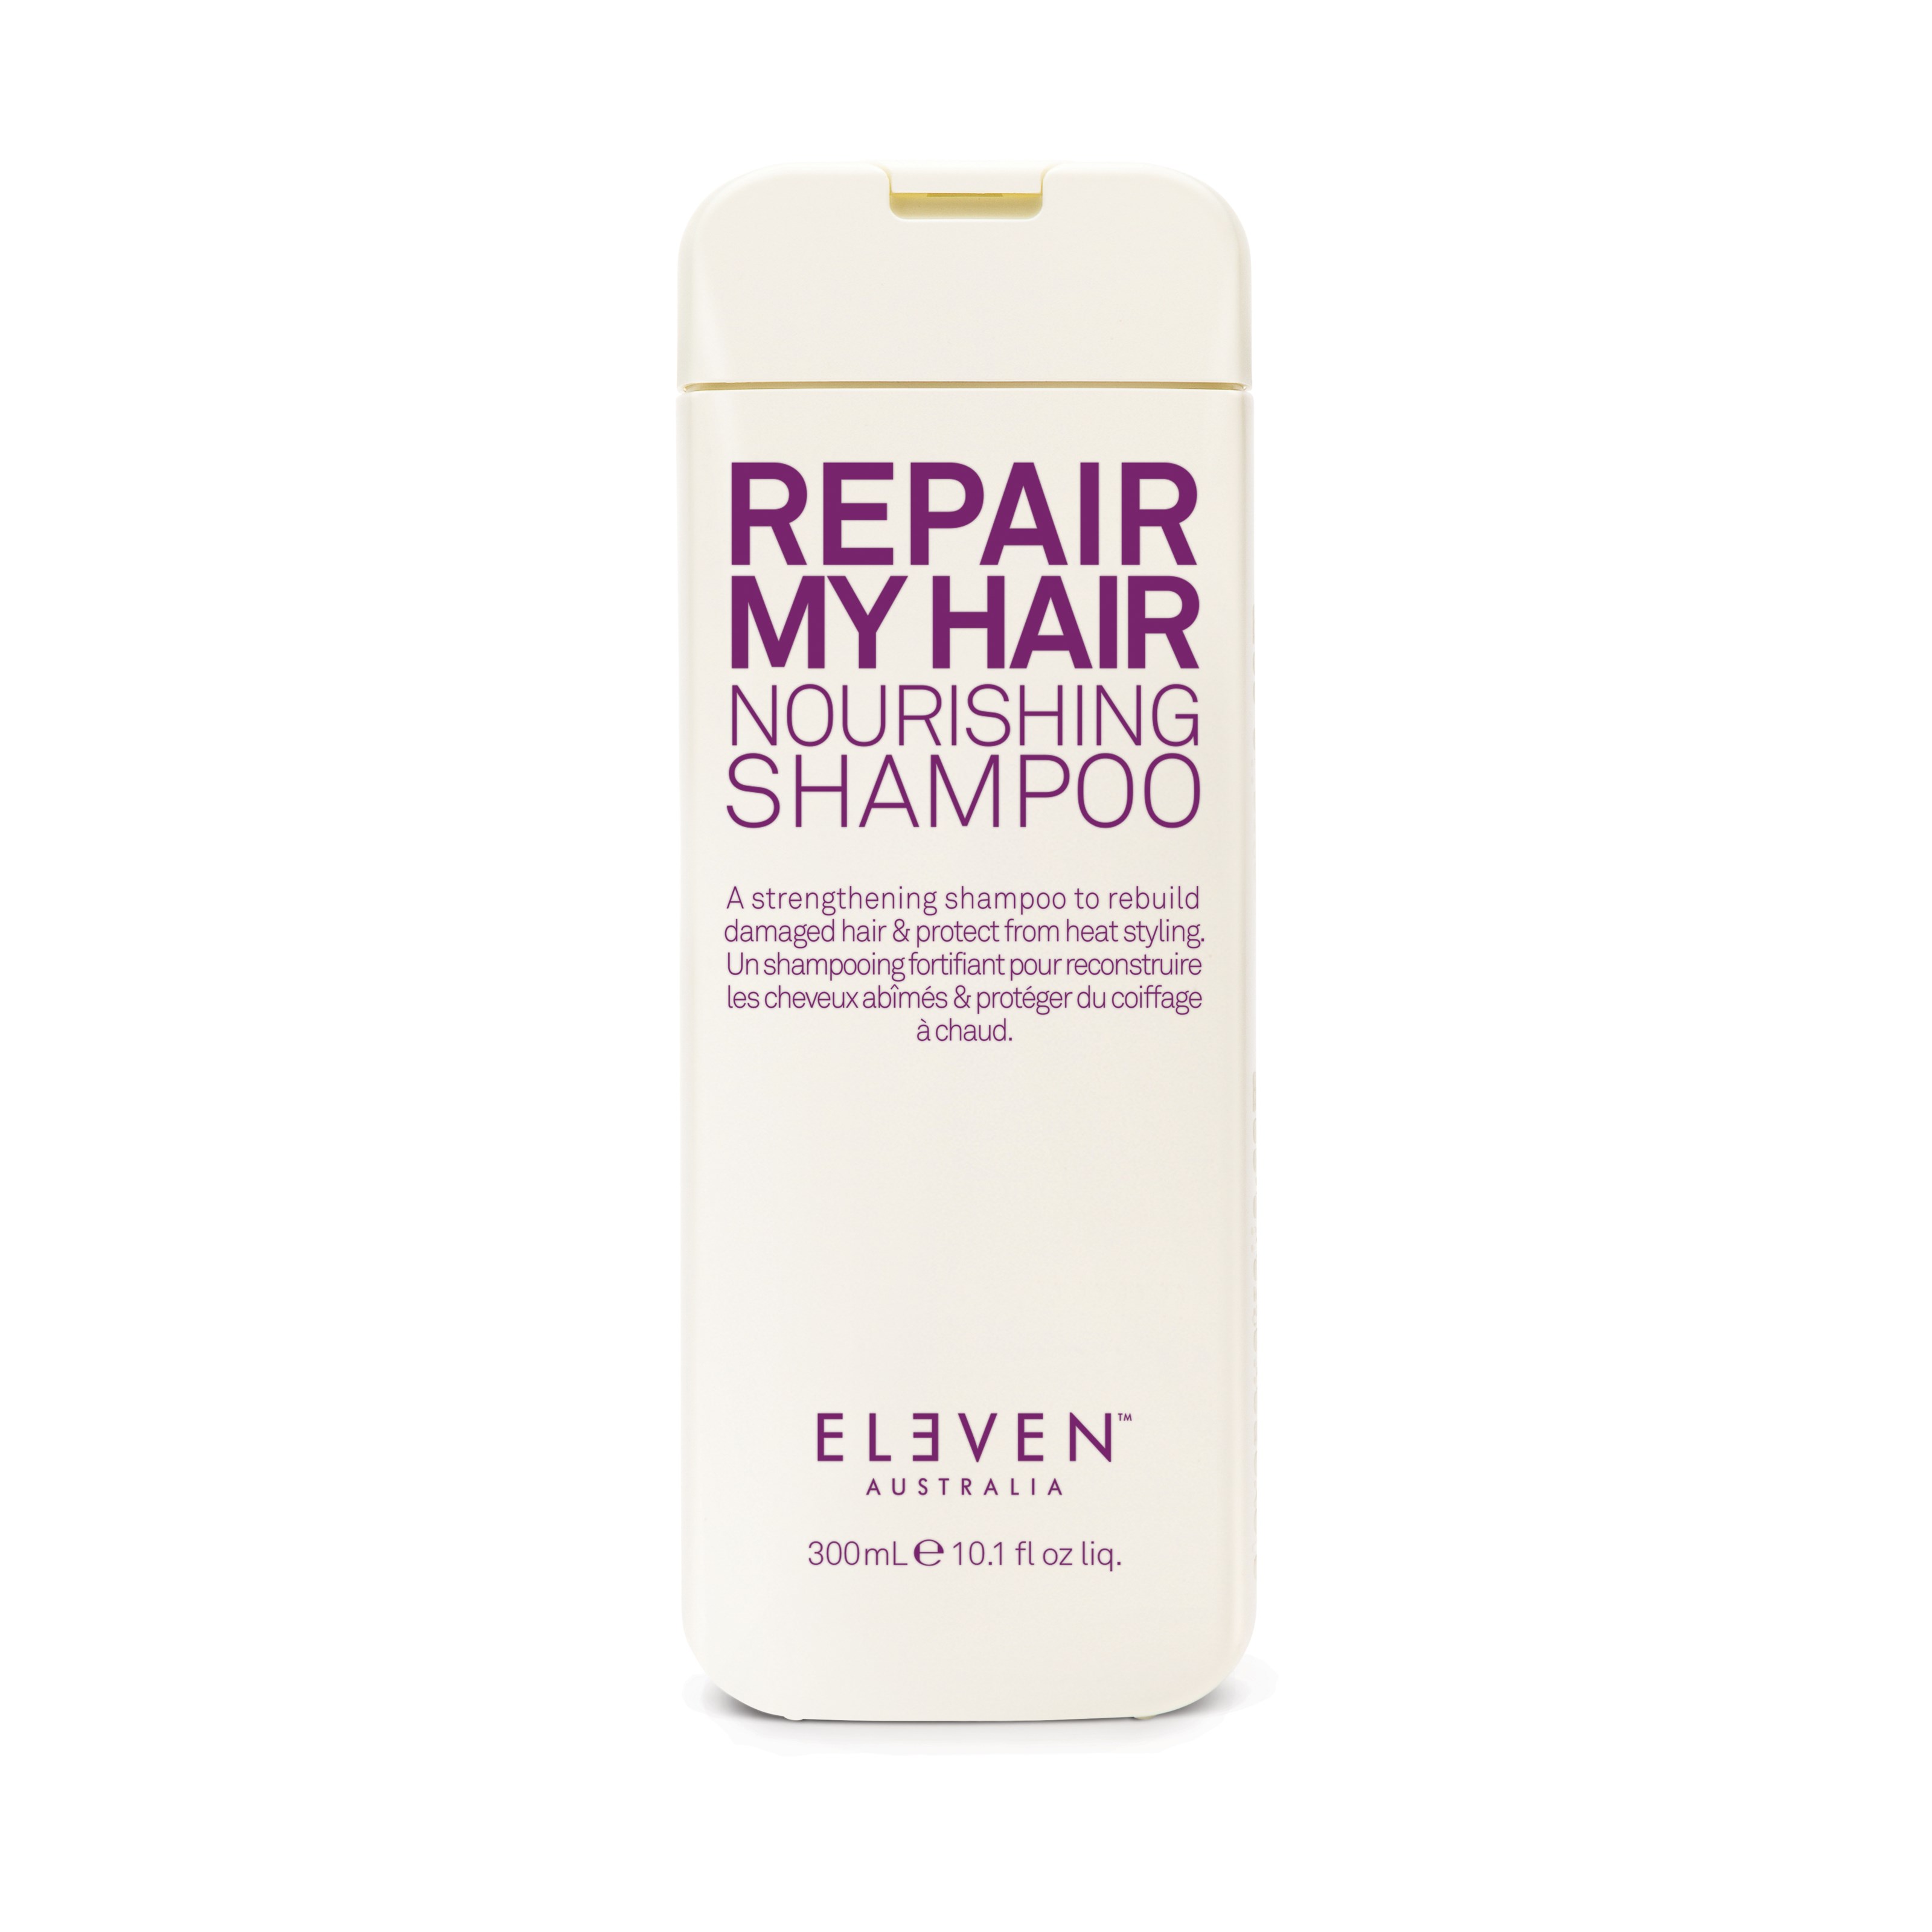 Eleven Australia Repair My Hair Nourishing Shampoo 300 ml